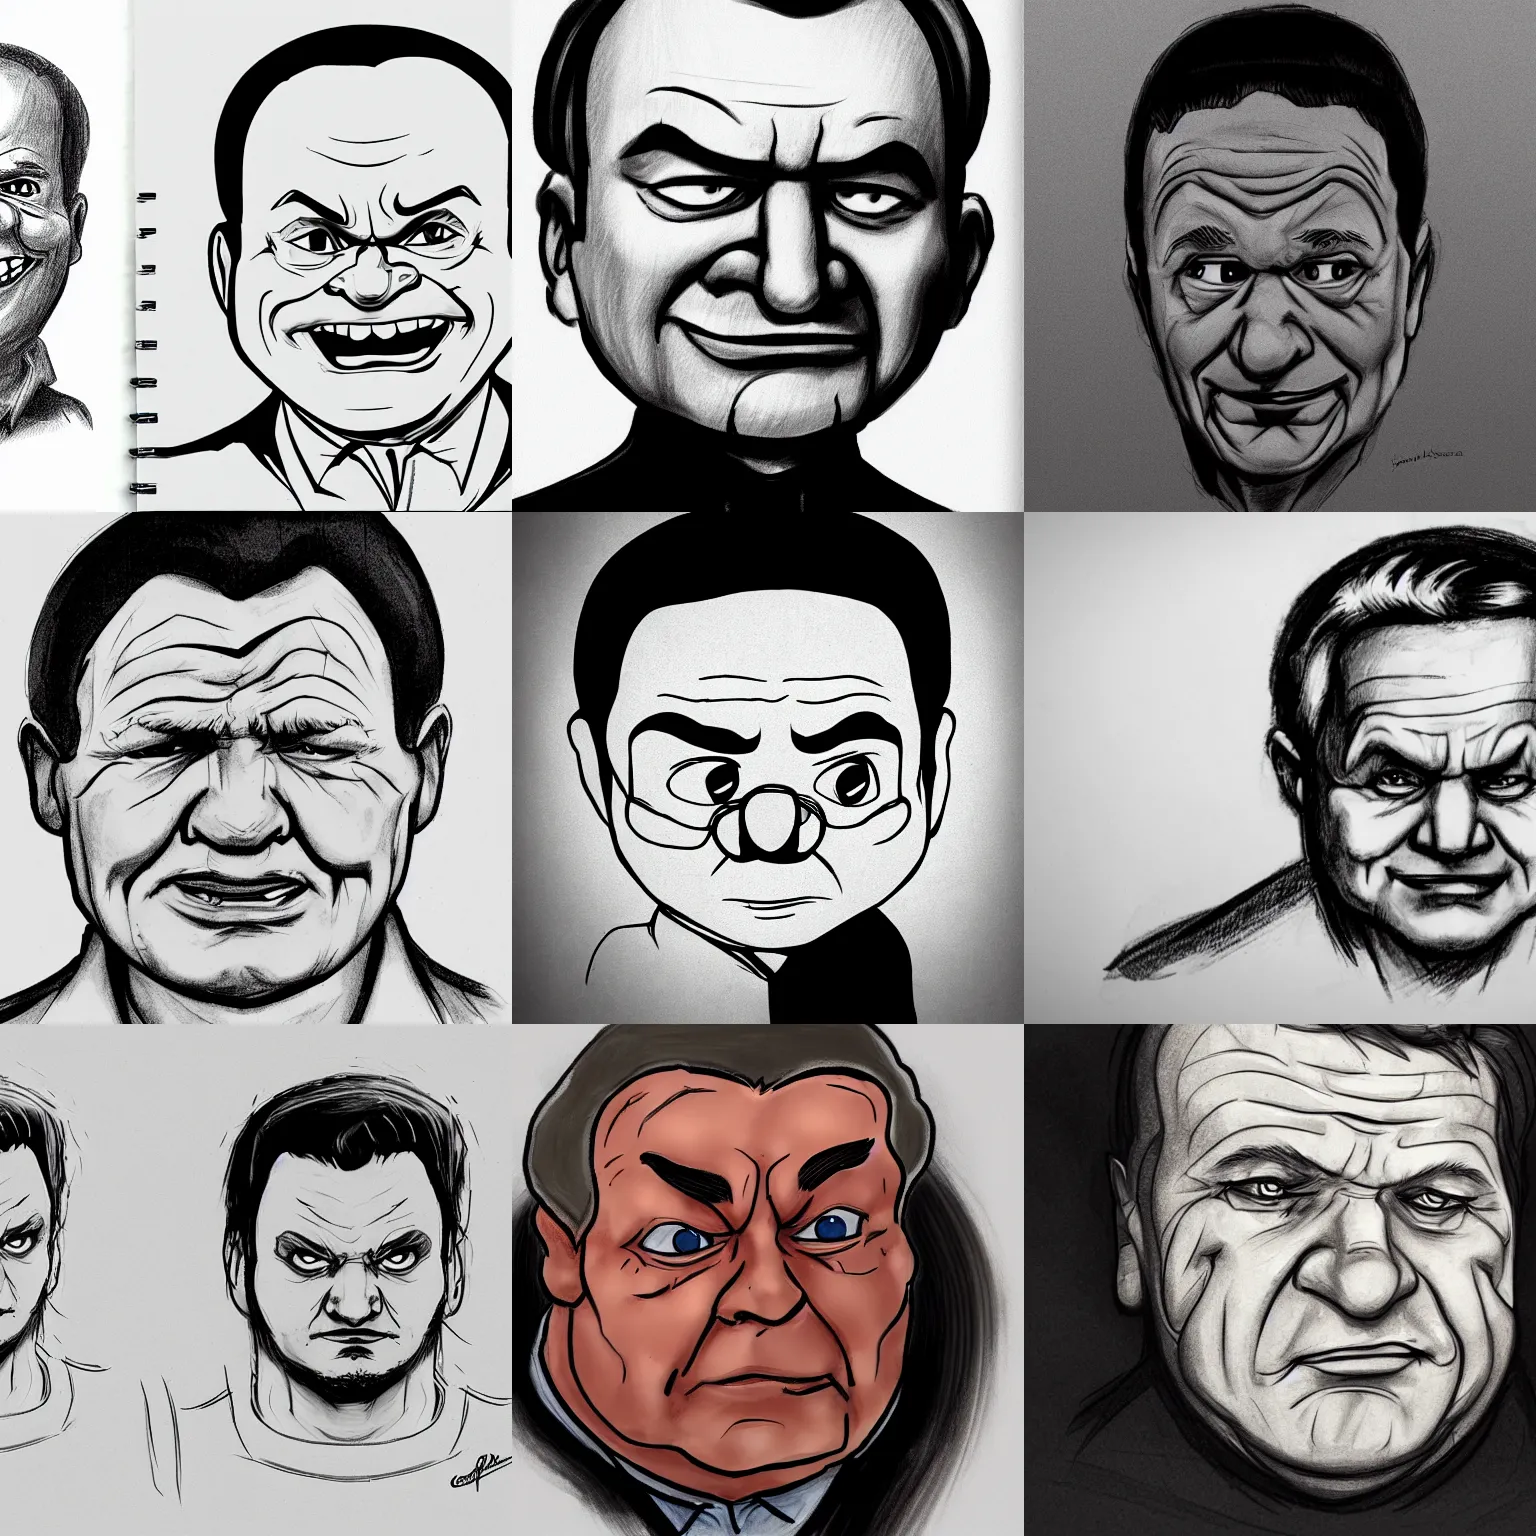 Prompt: lech kaczynski as disney character, face macro shot, 2 d concept art sketch ink